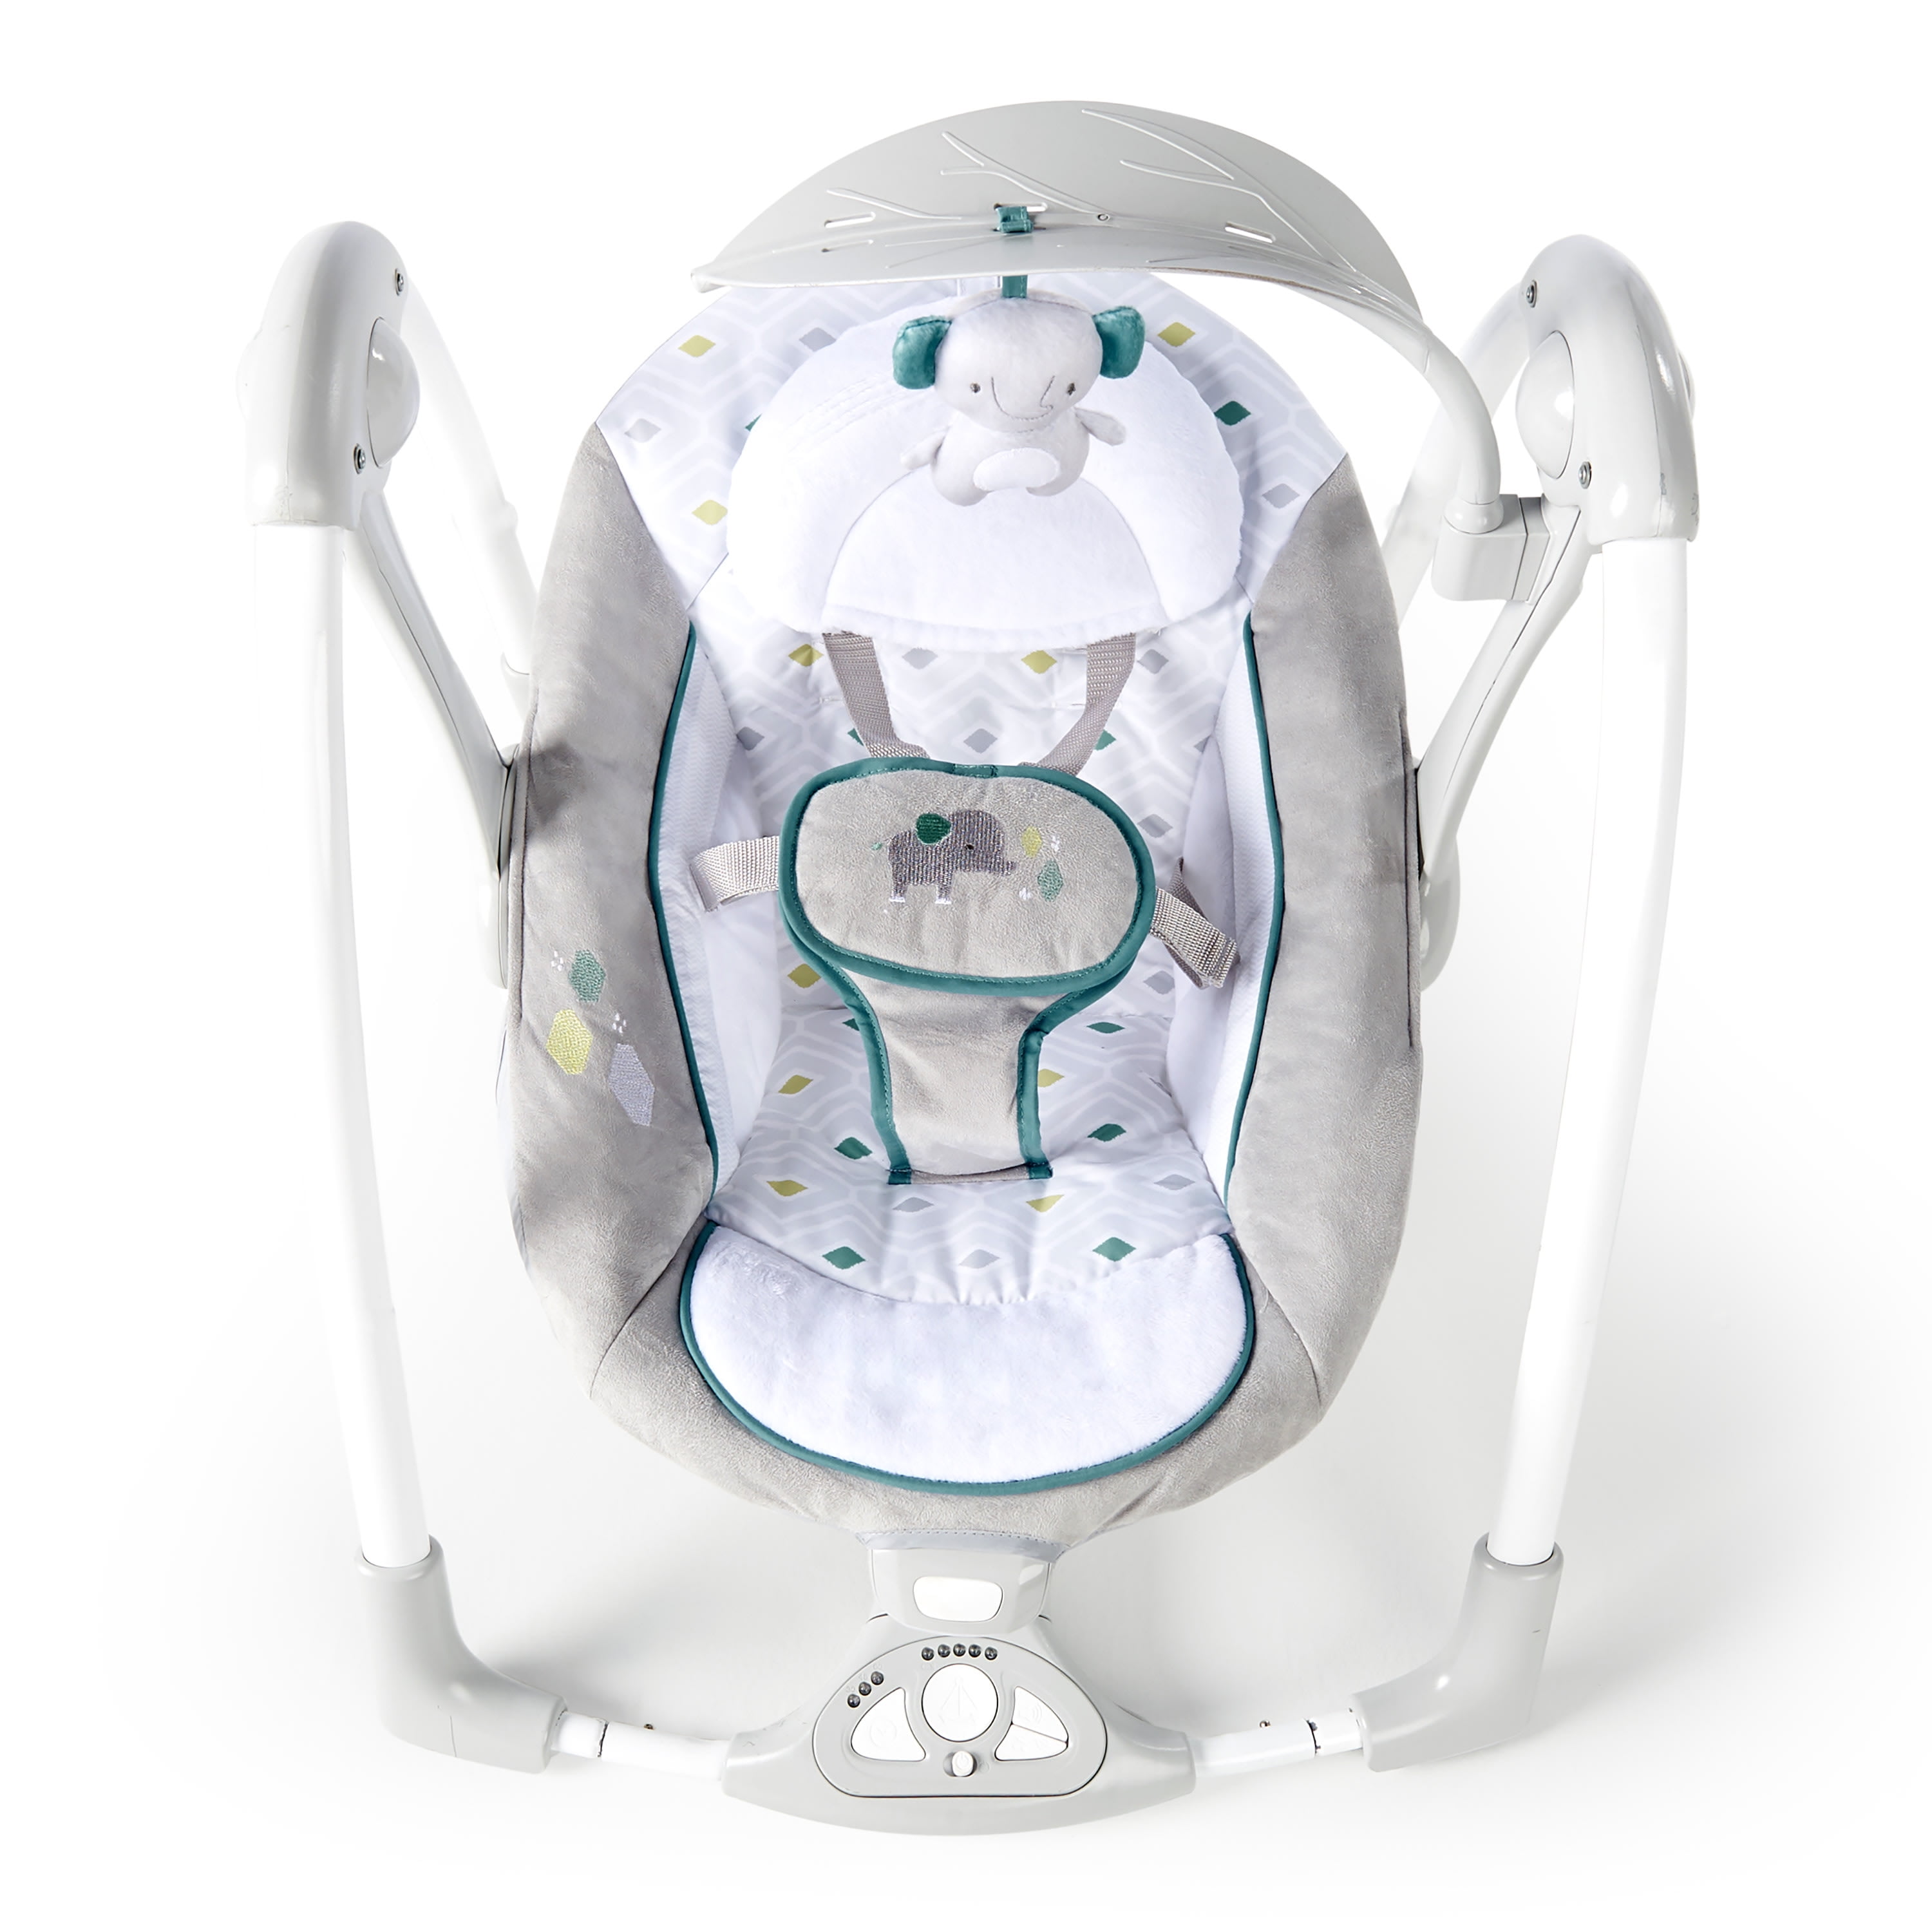 Portable Infant, Me Nash, Baby Vibrating Swing Ingenuity Gray Convert 2-in-1